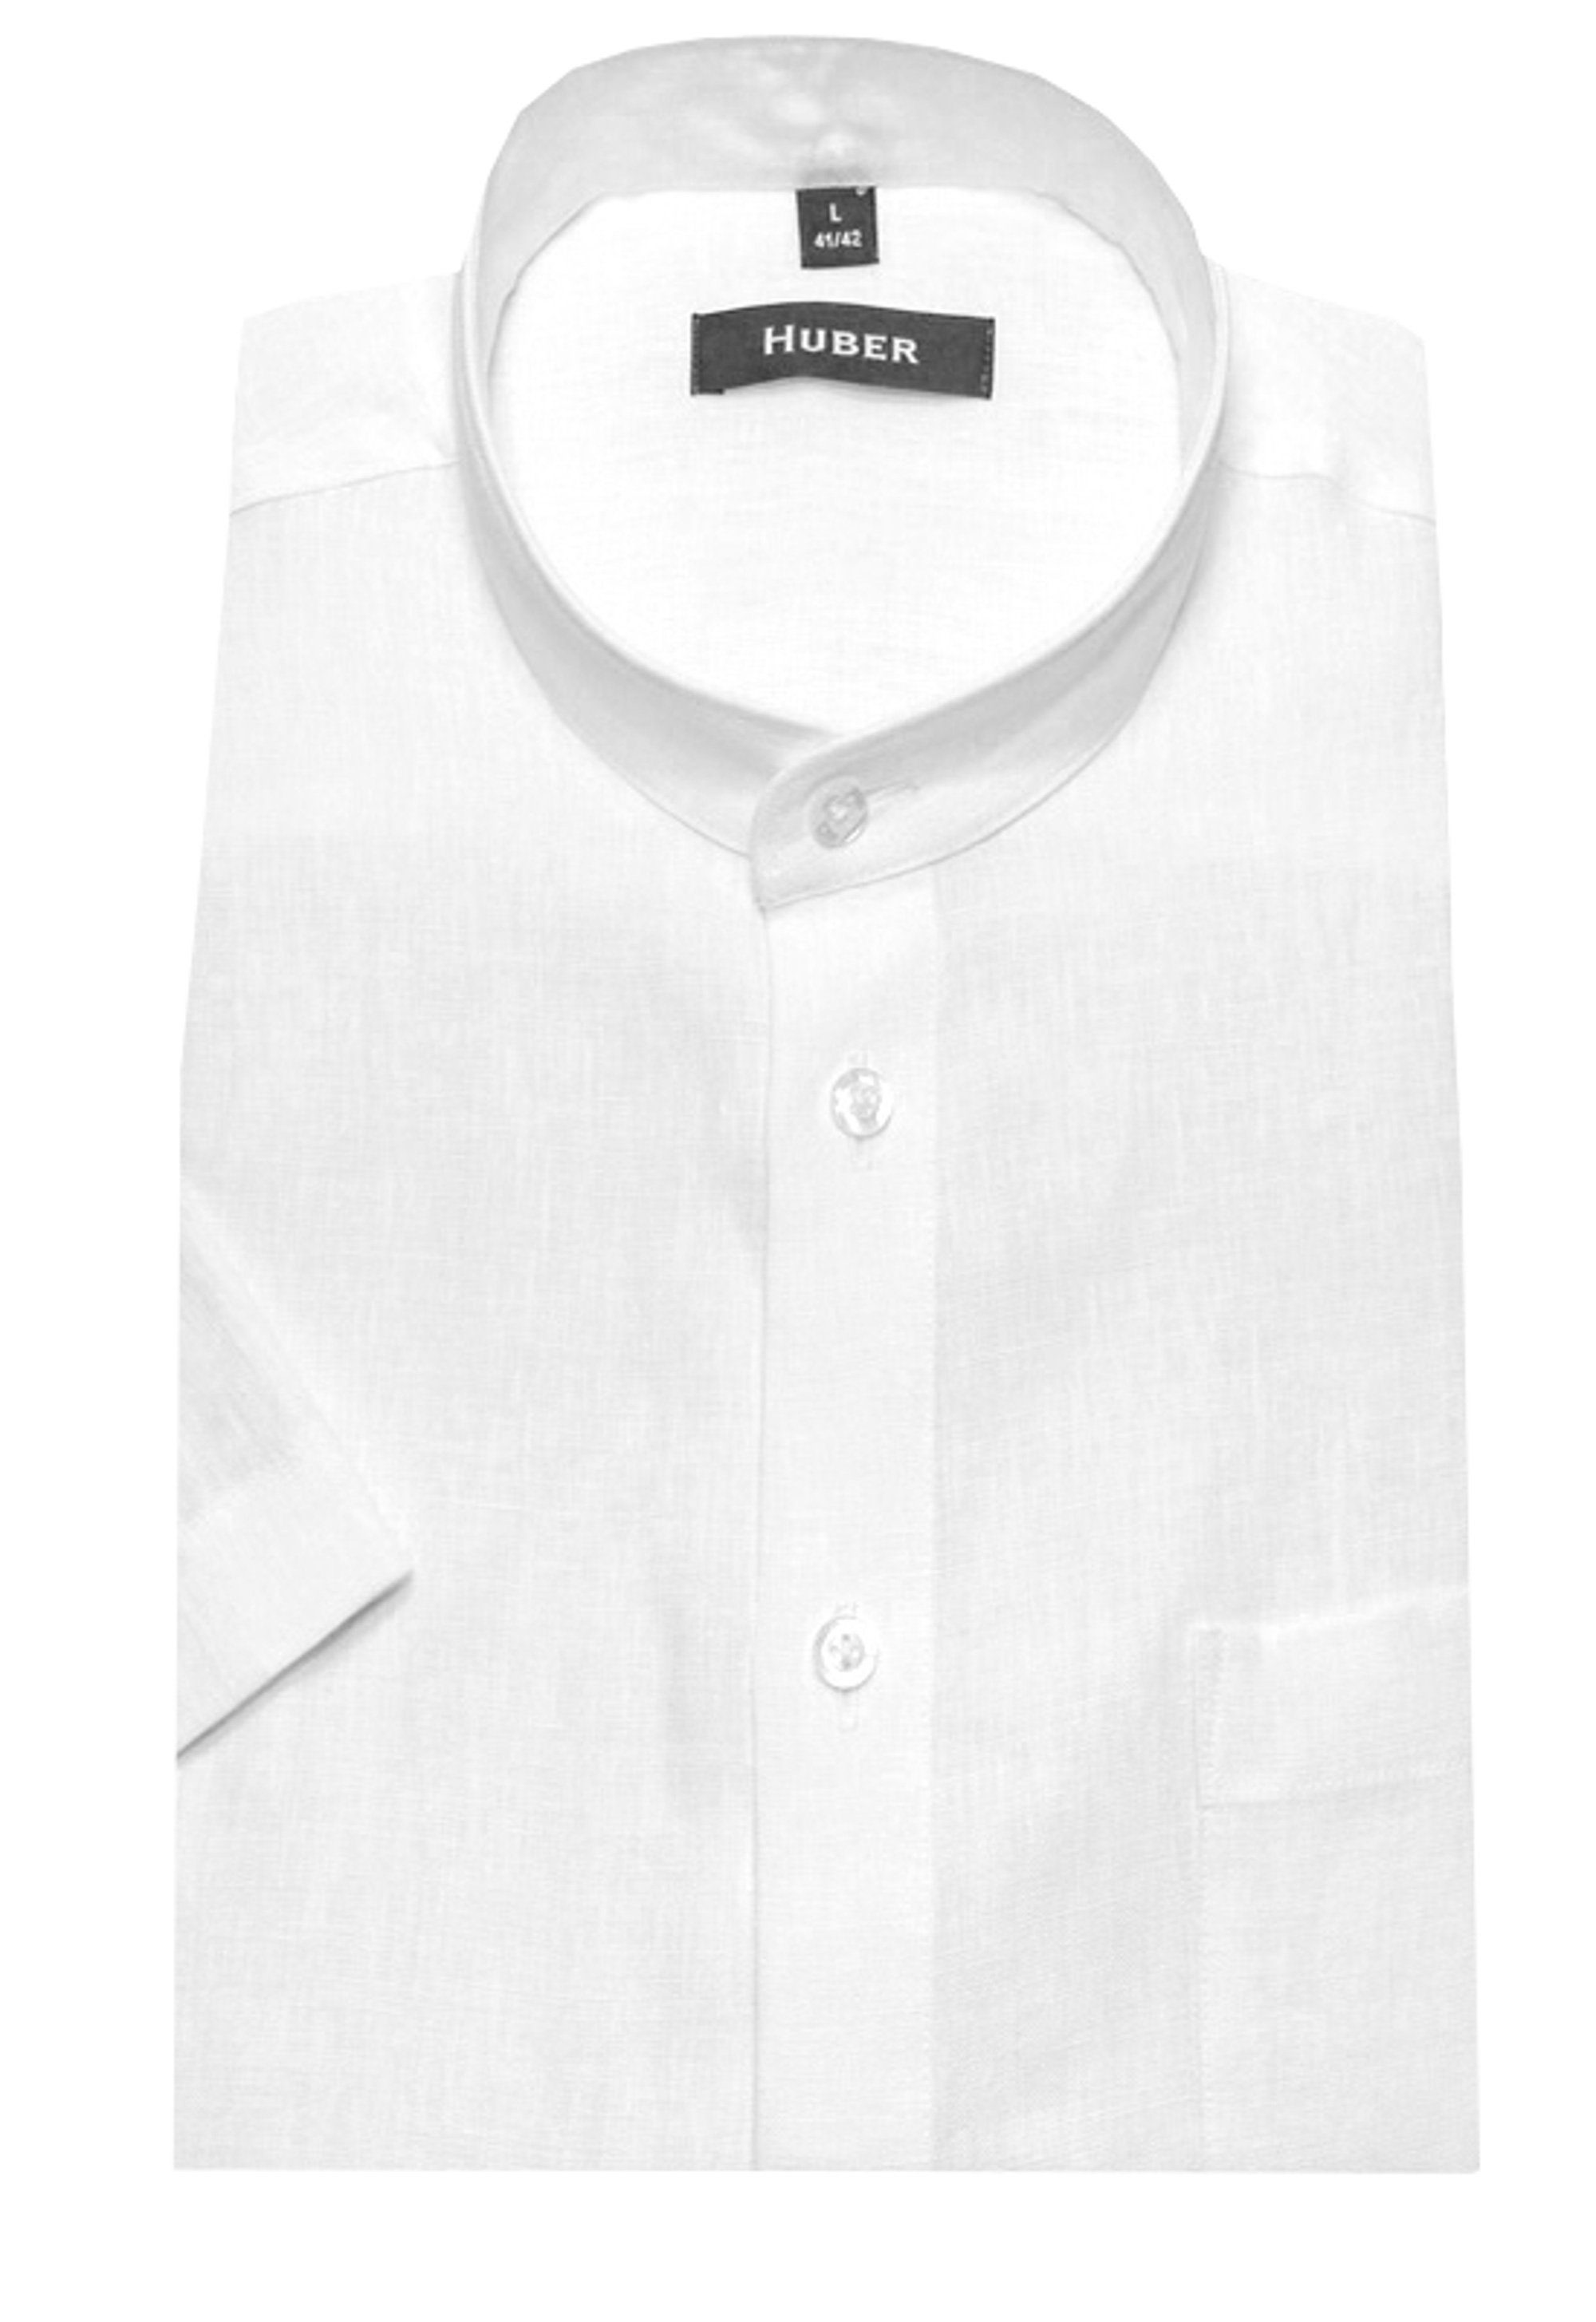 Huber Hemden Kurzarmhemd HU-0114 Stehkragen Kurzarm 100%Leinen-feiner leichter Stoff Regular Fit weiß